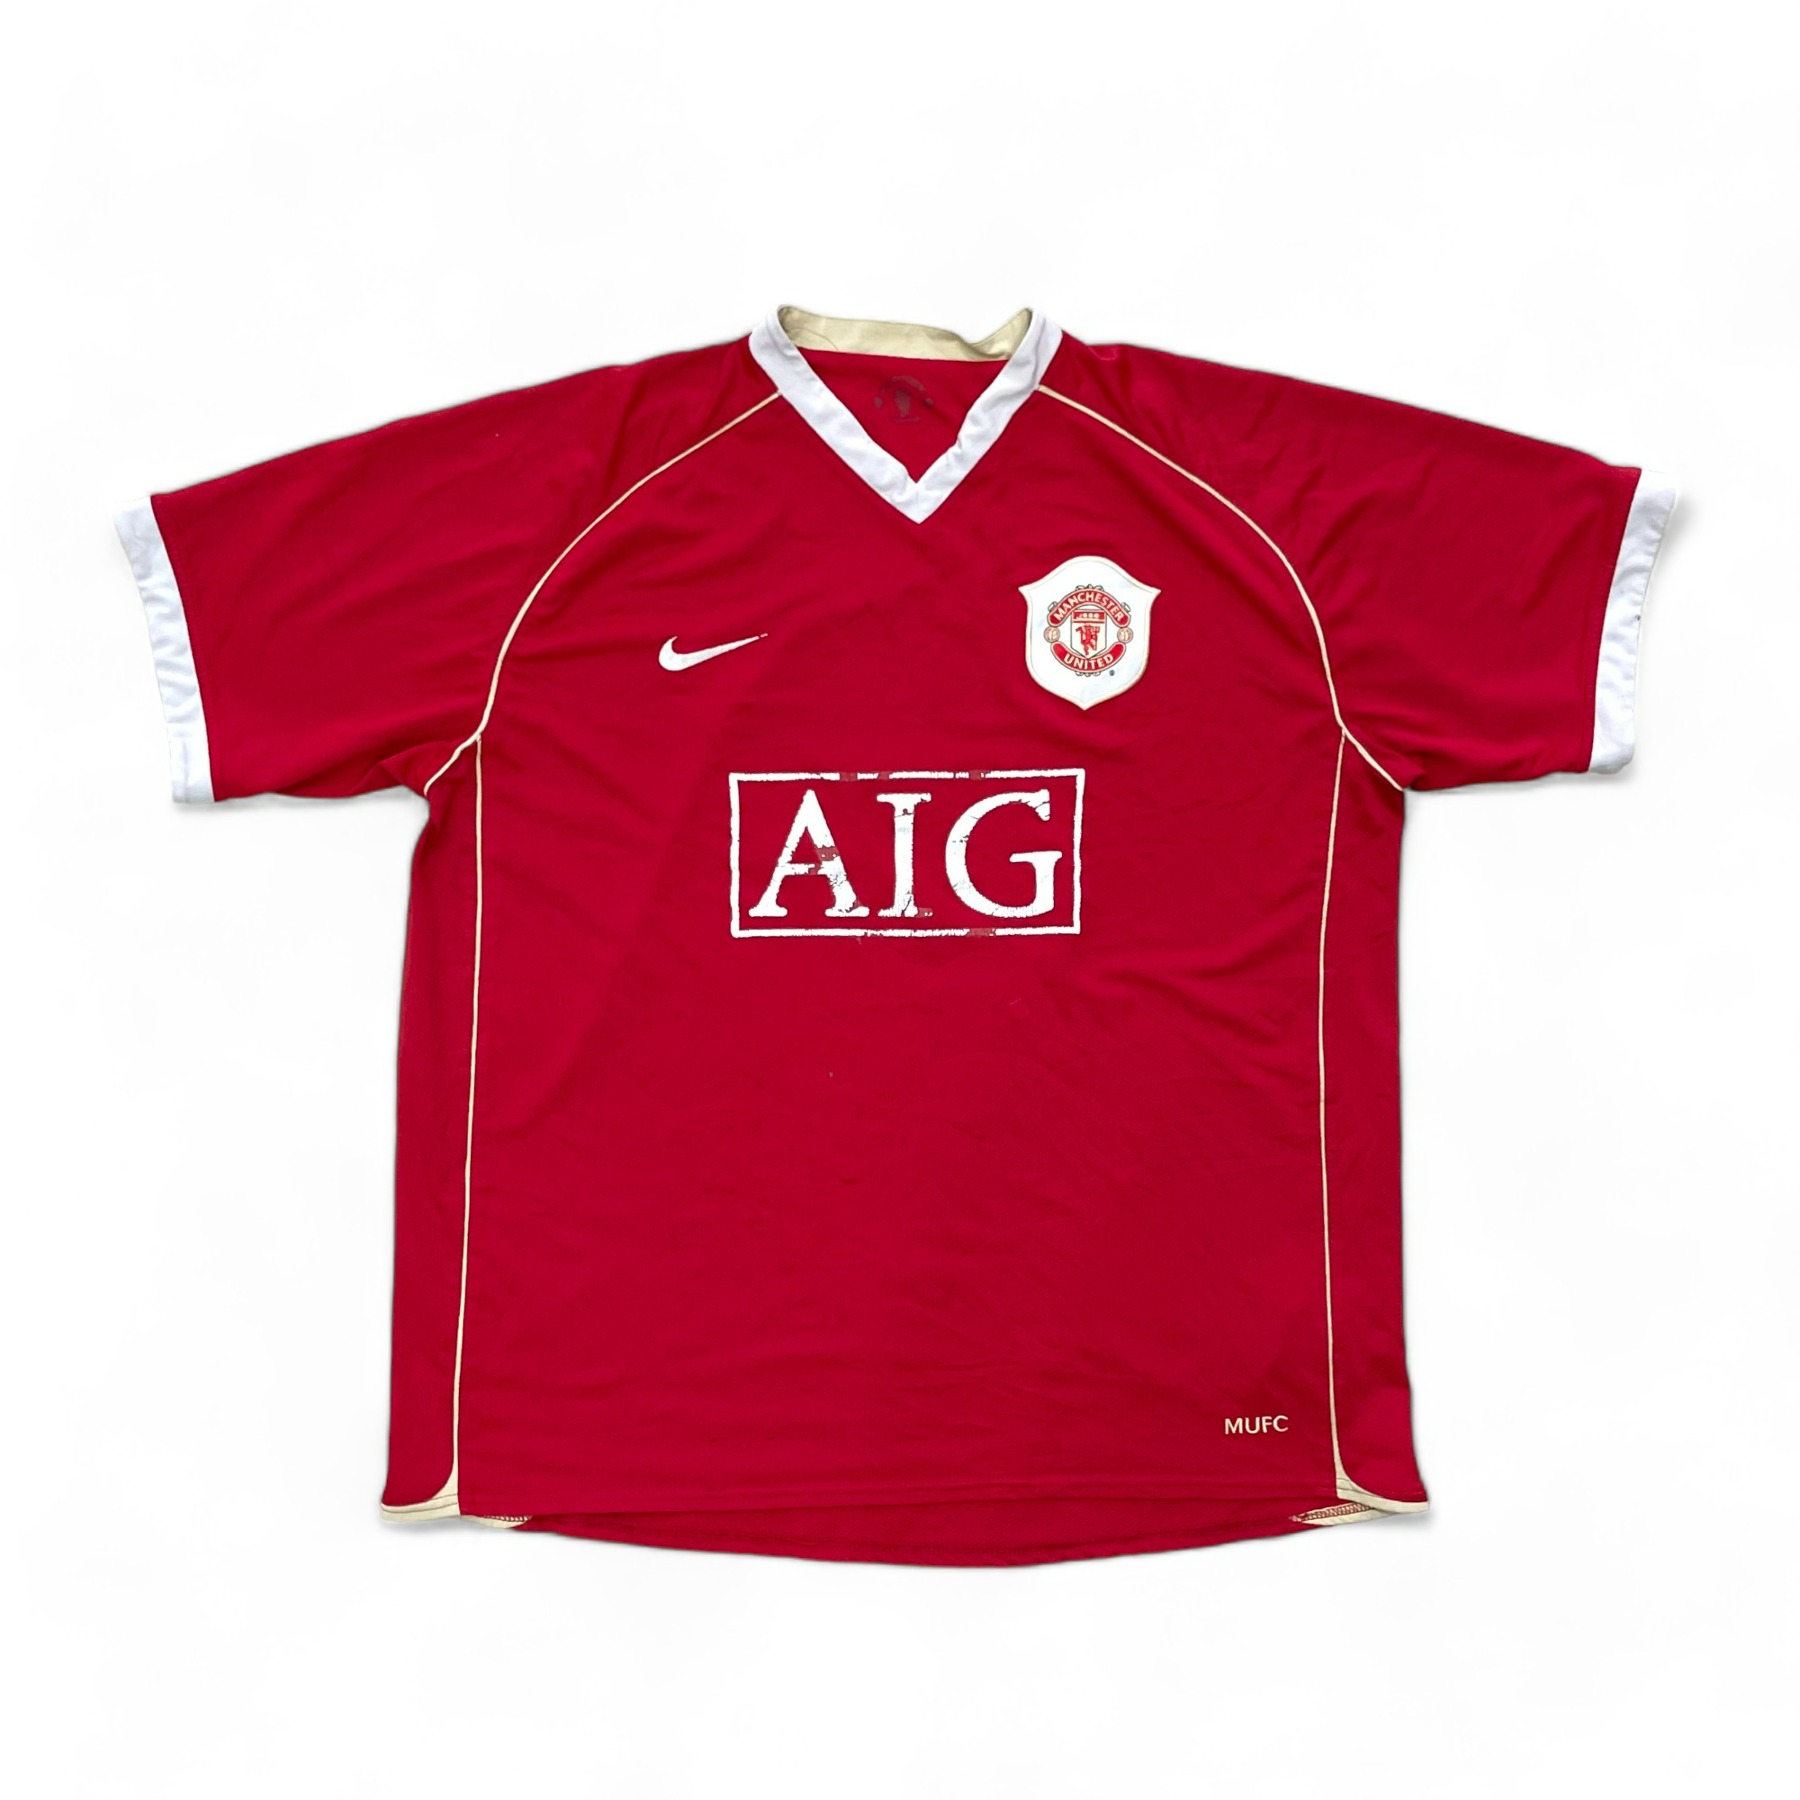 06-07 Manchester United Home Uniform - XL